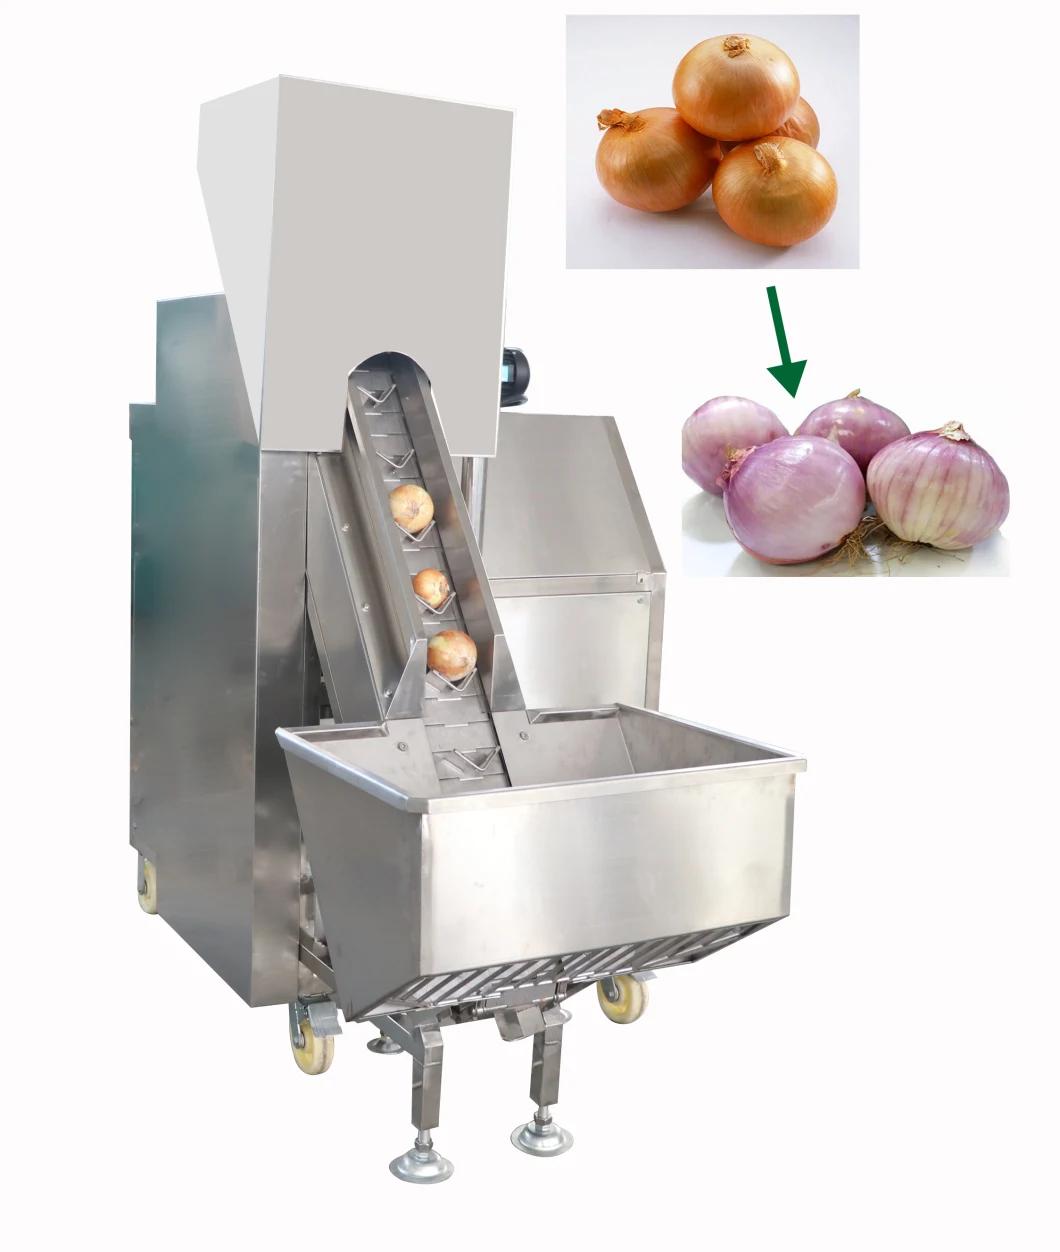 Full Automatic Onion Peeling and Cutting Machine